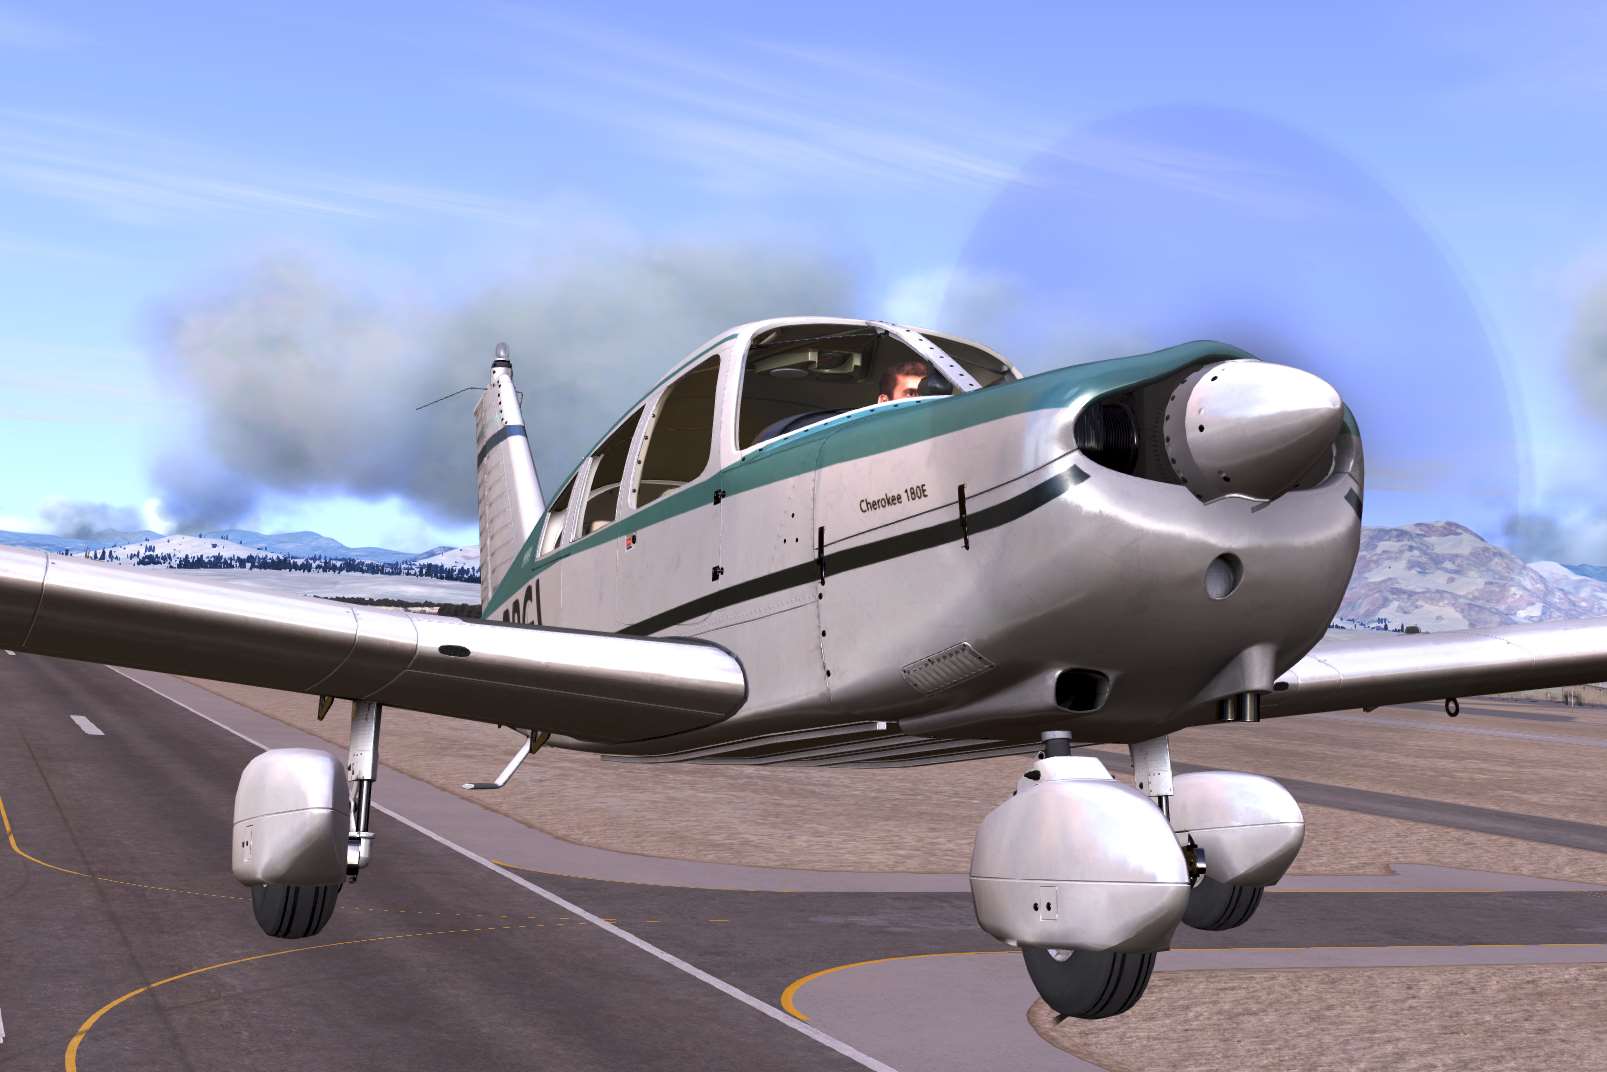 Dovetail Games makes a range of simulator games involving trains, planes and fishing